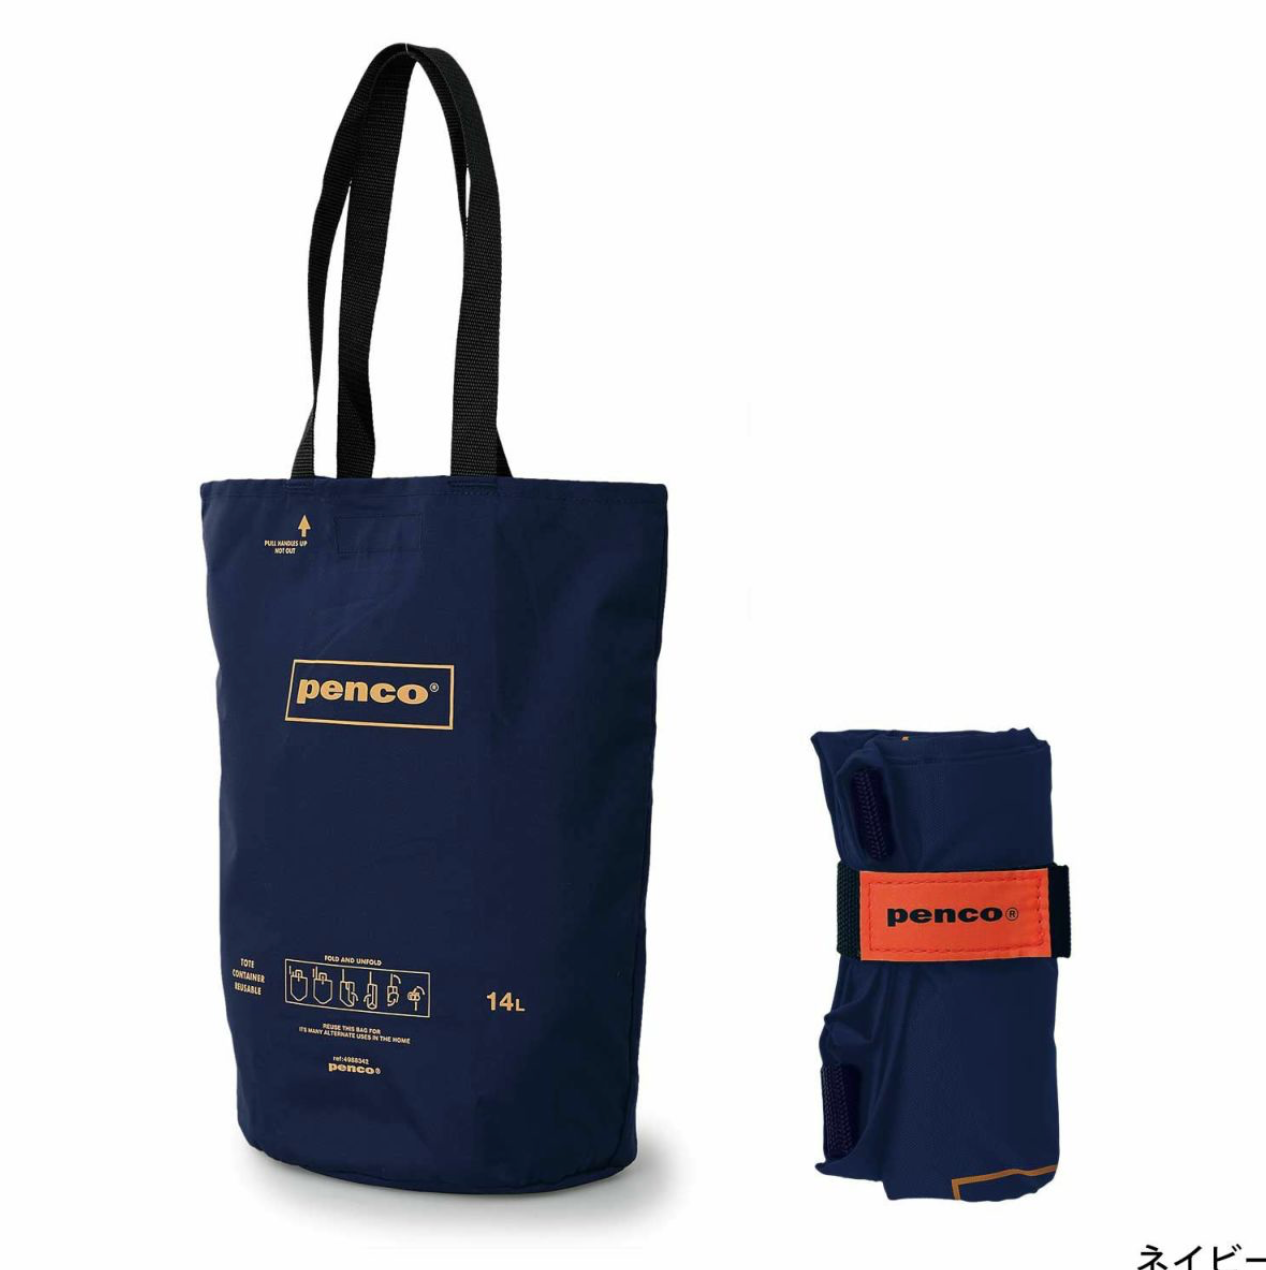 Penco Bucket Tote Bag in Navy